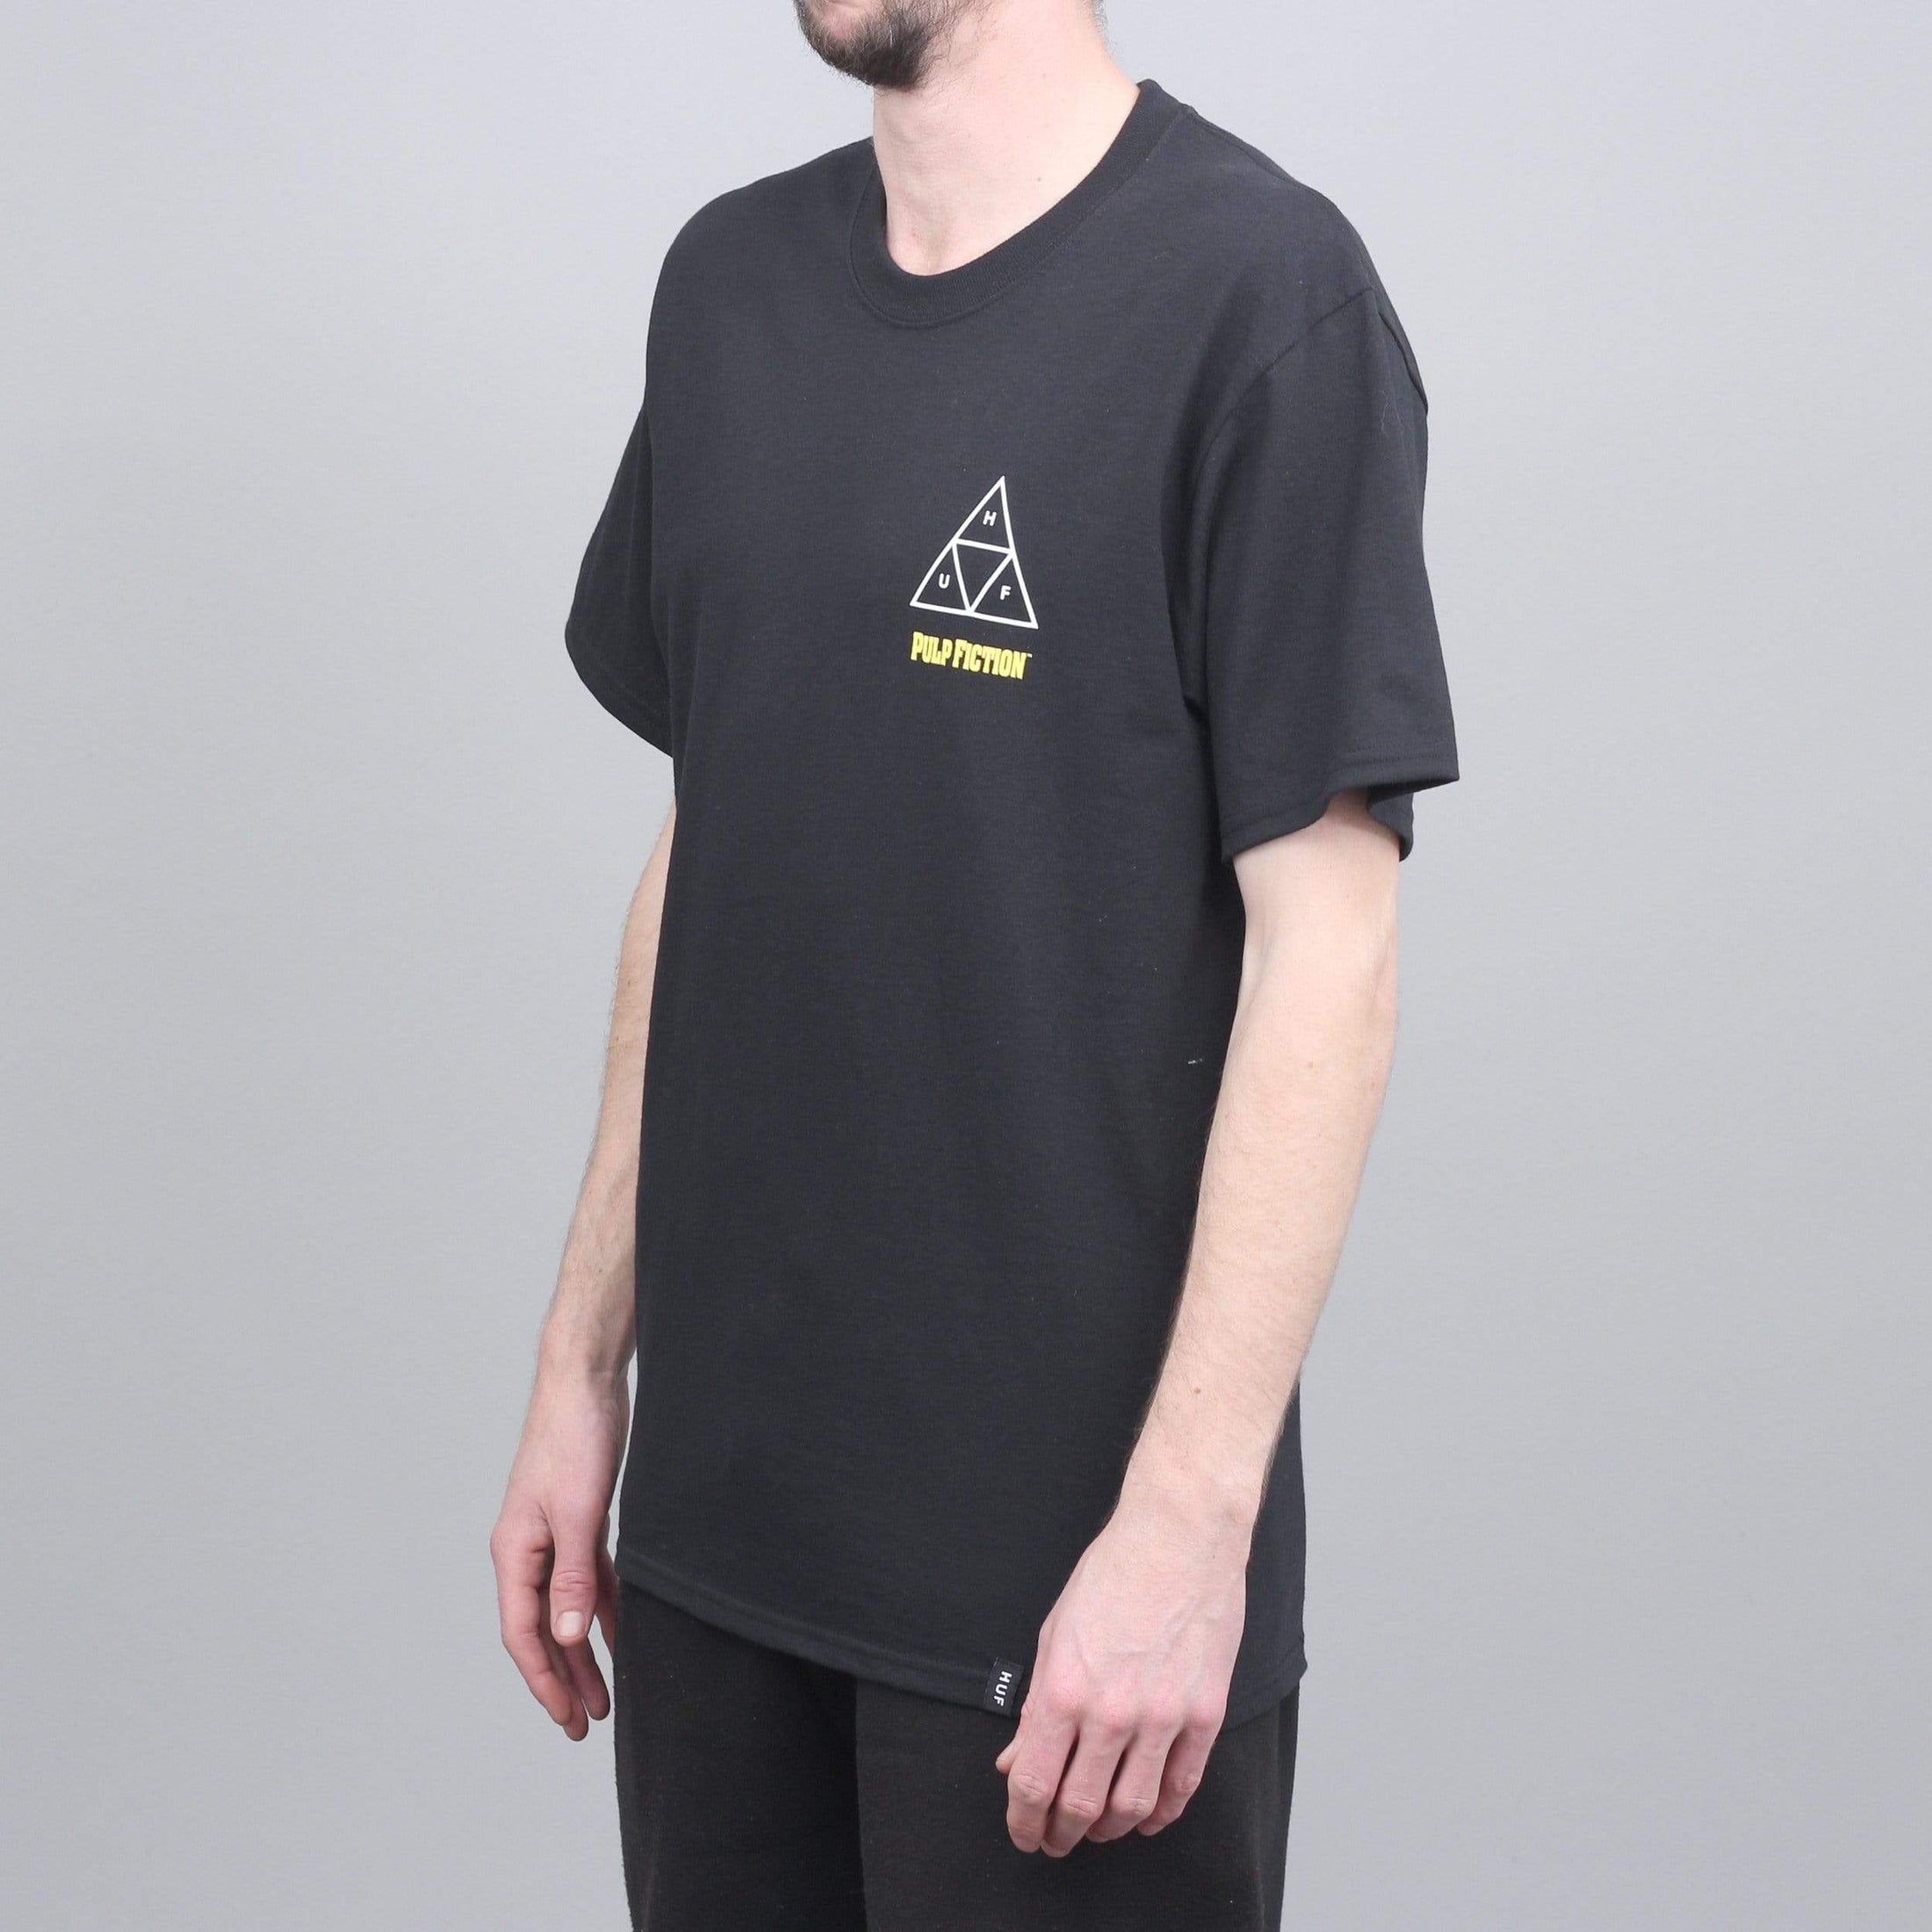 HUF x Pulp Fiction Mia Triple Triangle T-Shirt Black